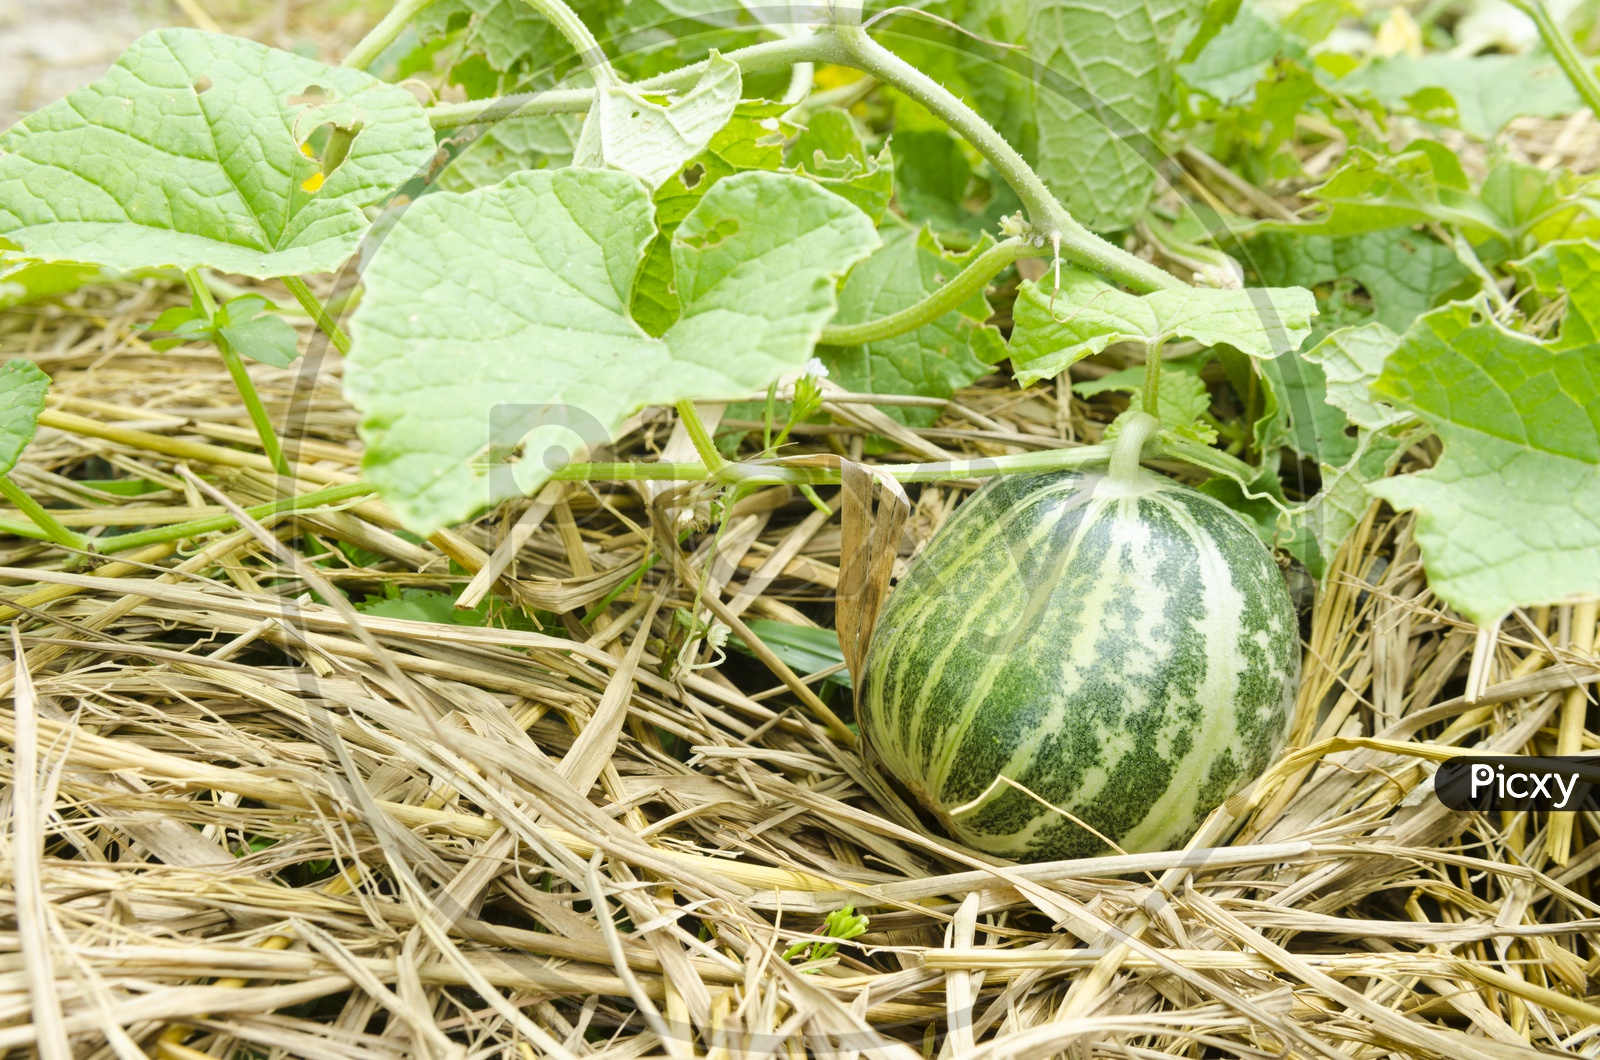 Watermelon Harvesting  in a Farm